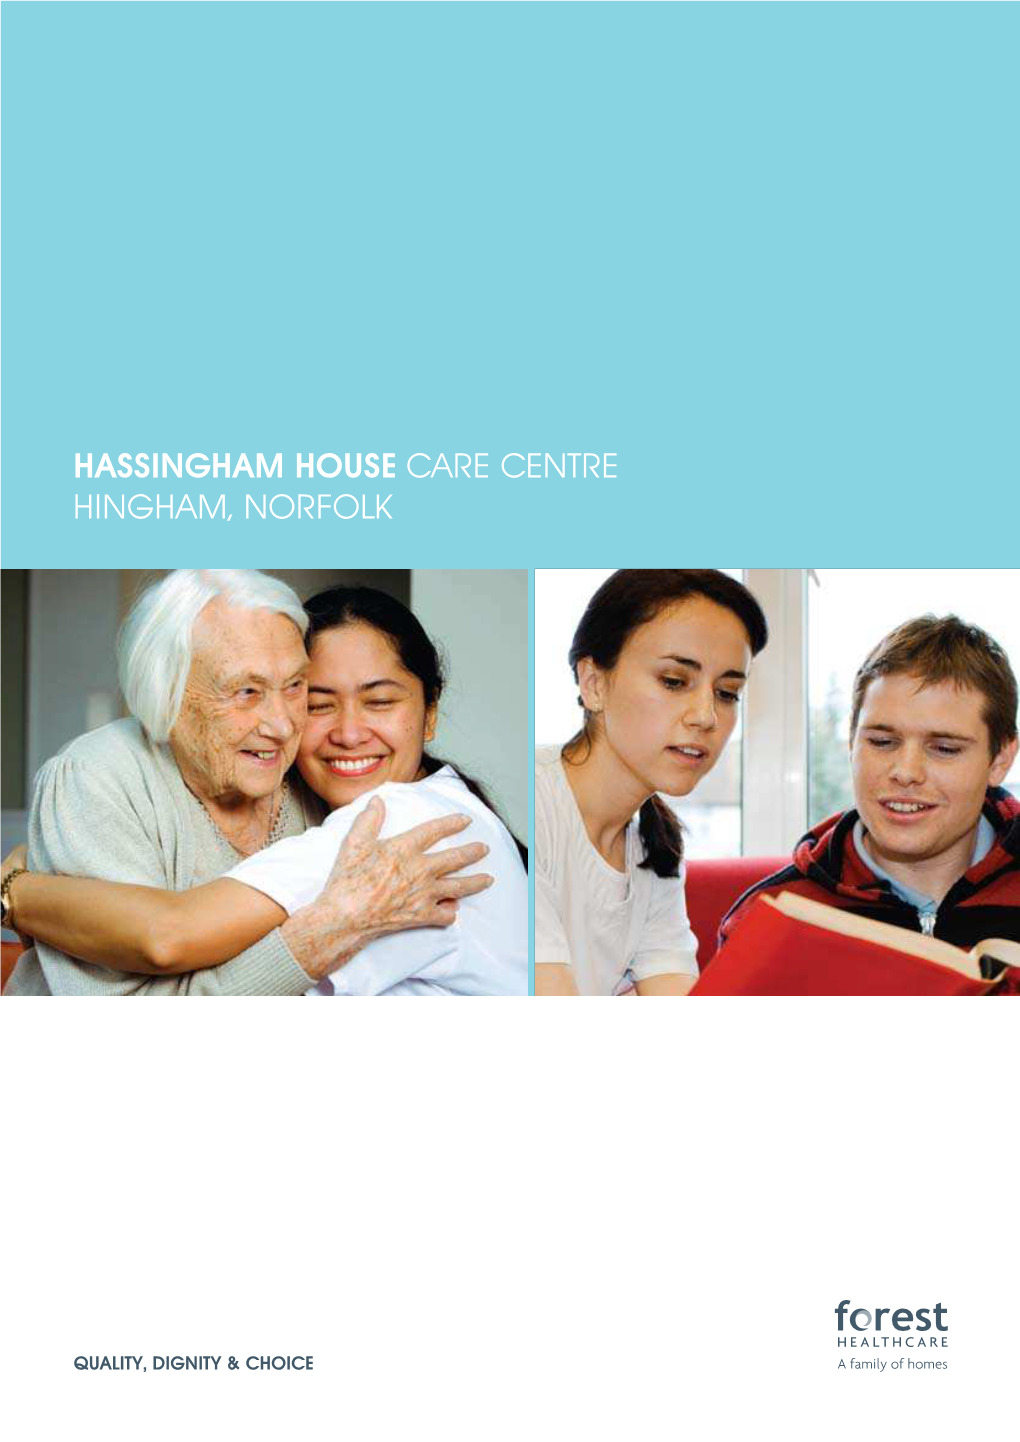 Hassingham House Care Centre Hingham, Norfolk